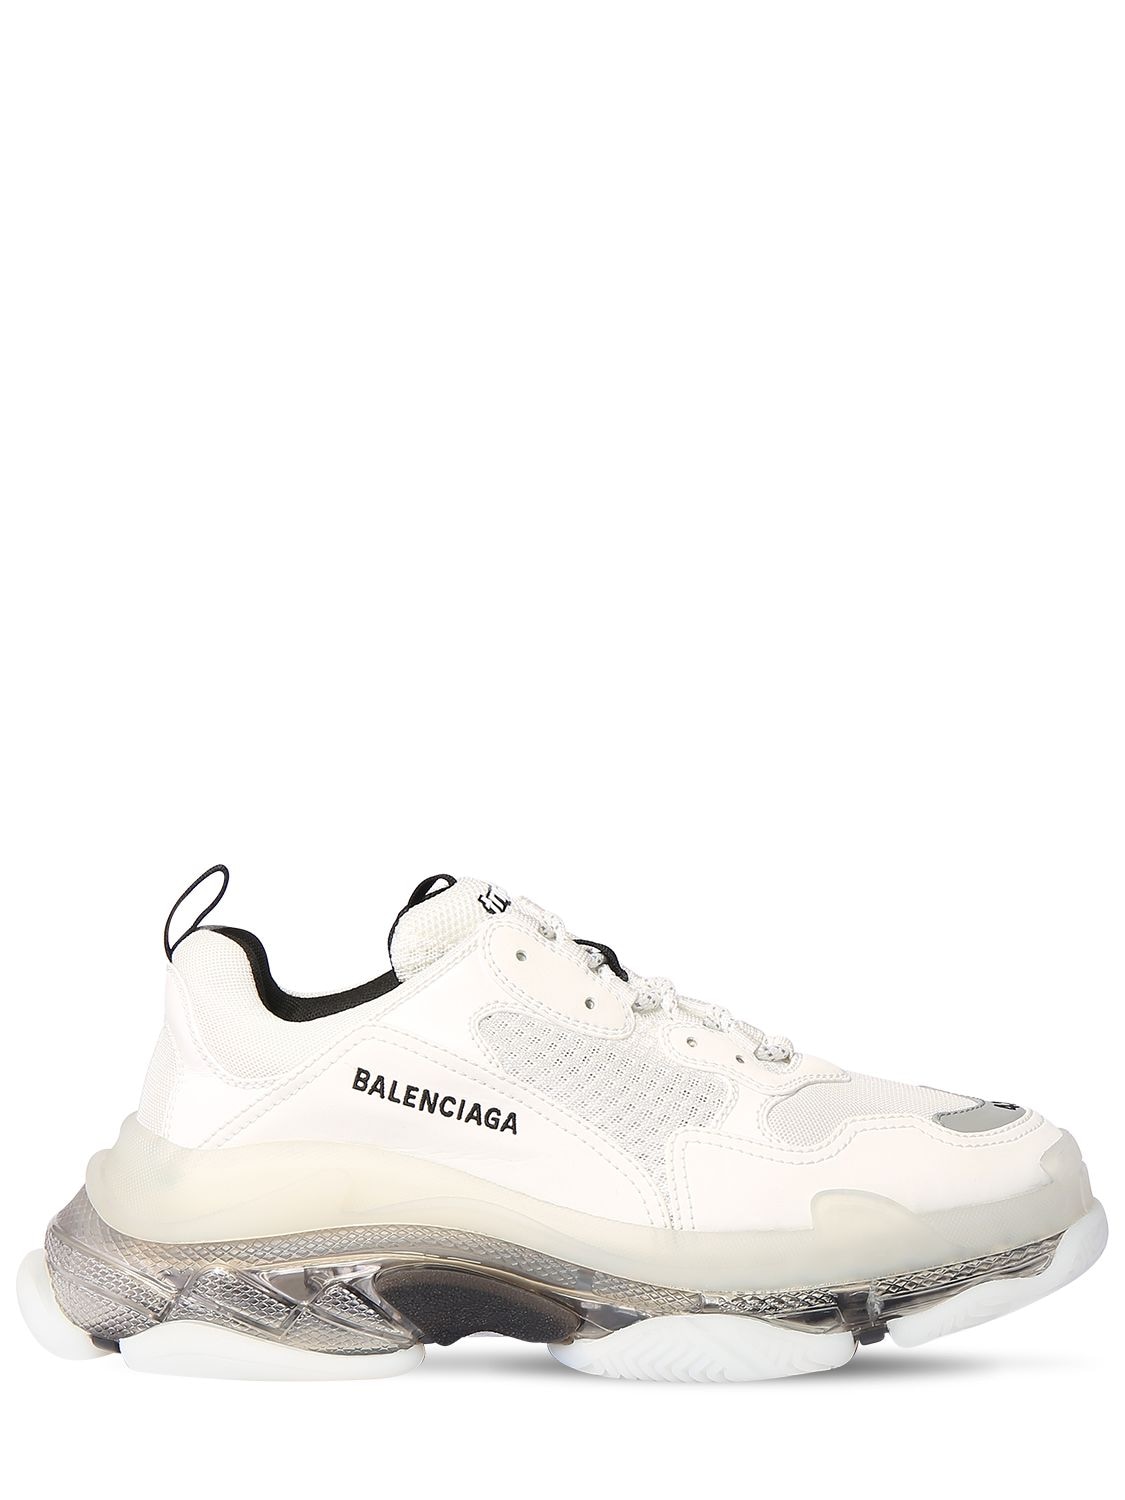 BALENCIAGA “TRIPLE S CLEAR SOLE”运动鞋,72IROW005-OTAXMG2